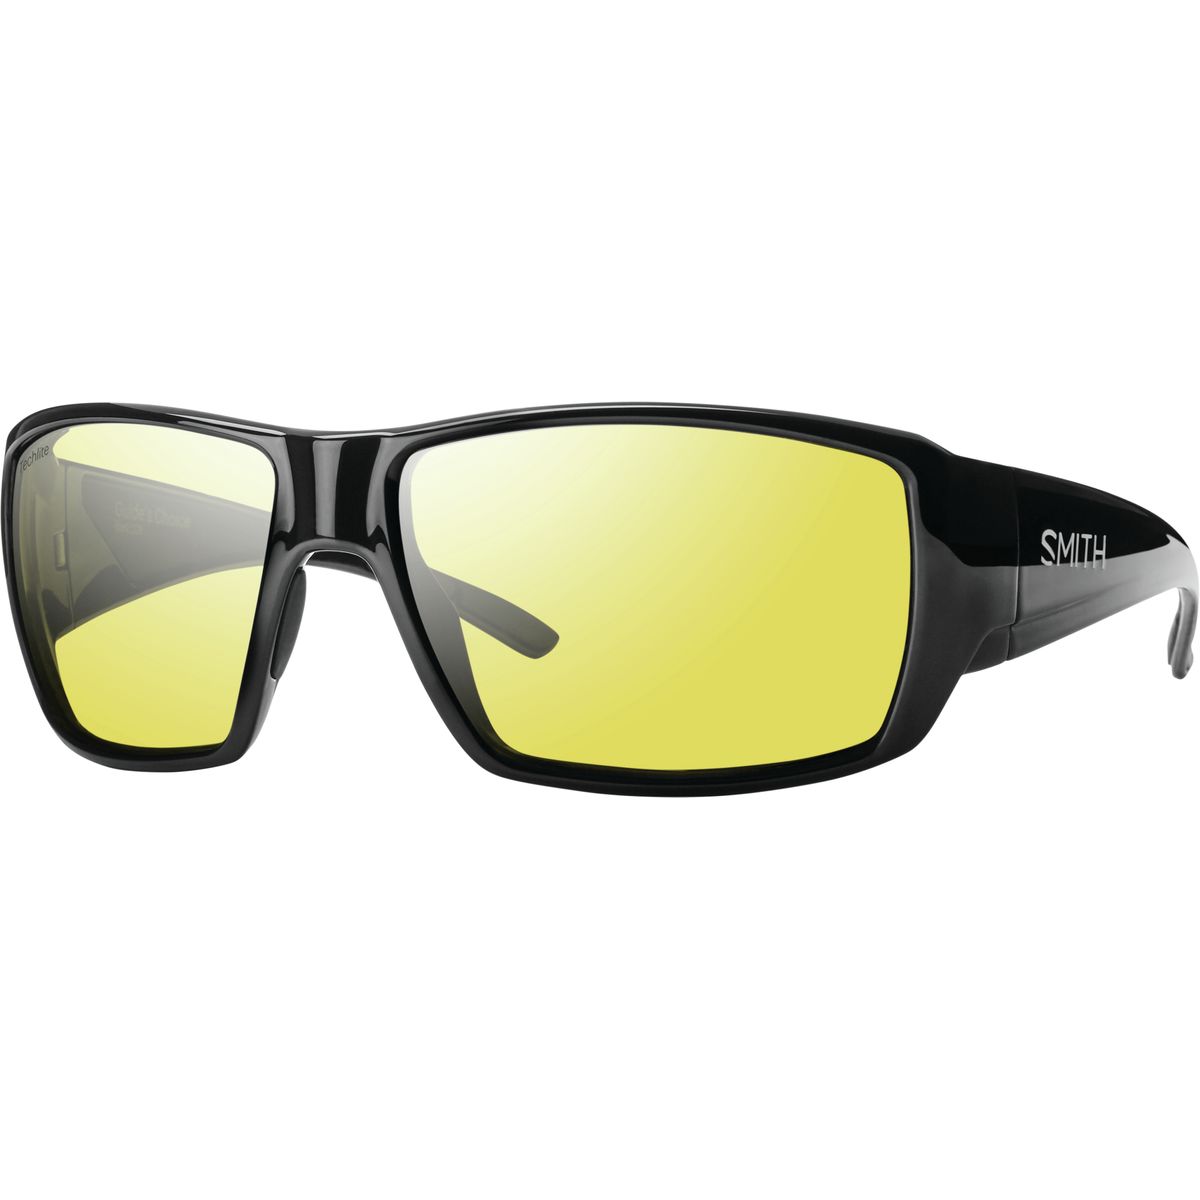 Smith Guides Choice Sunglasses Polarized Mens